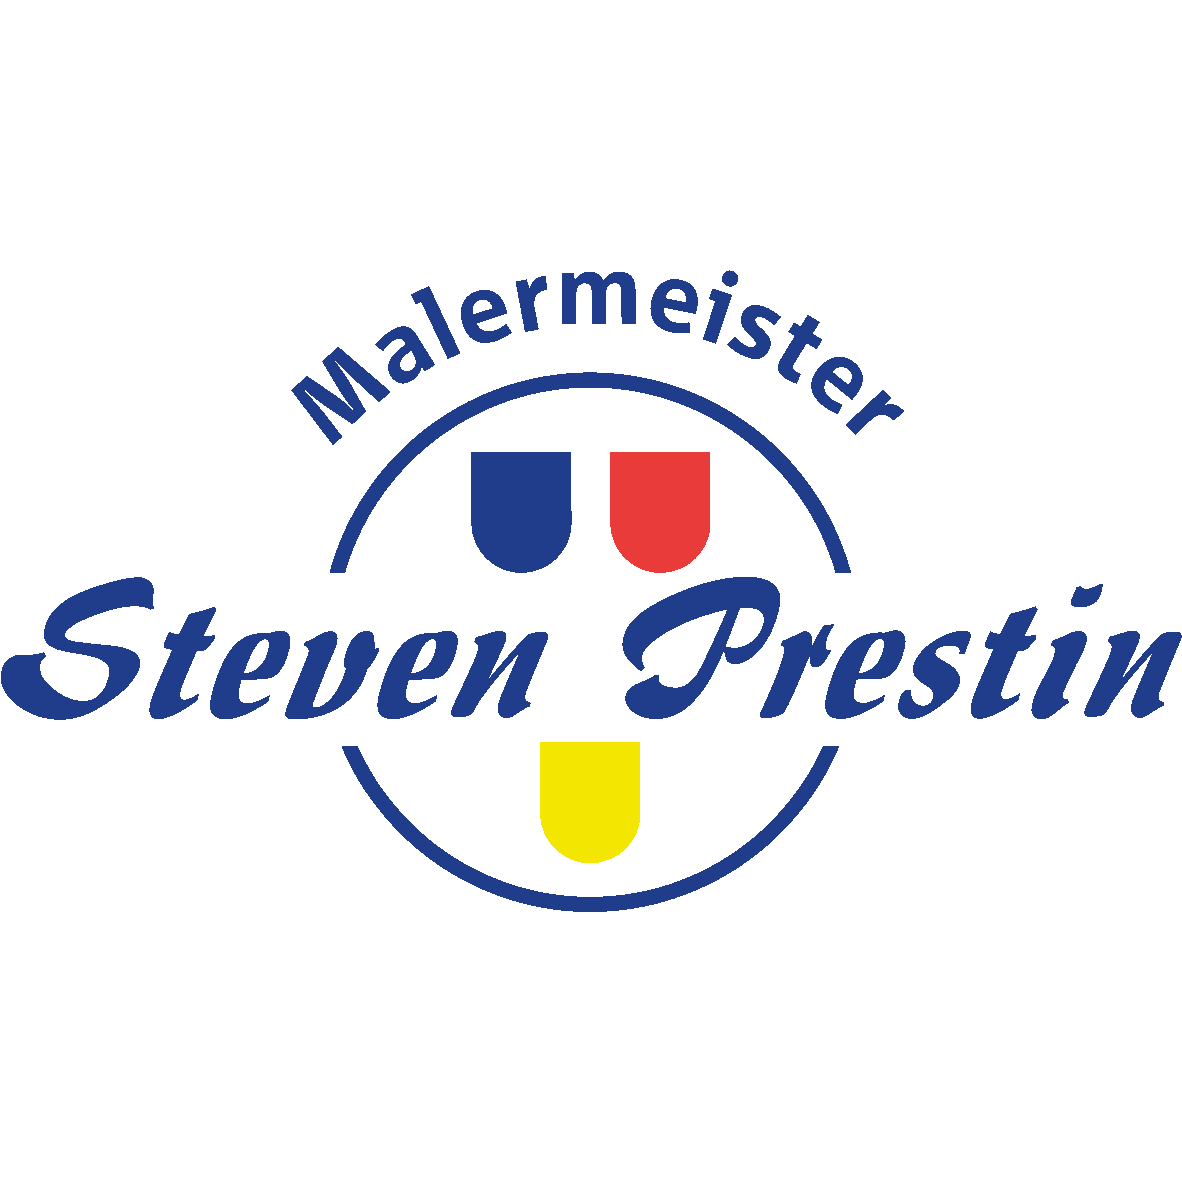 Steven Prestin Malermeister - Painter - Schwerin - 0385 5559970 Germany | ShowMeLocal.com